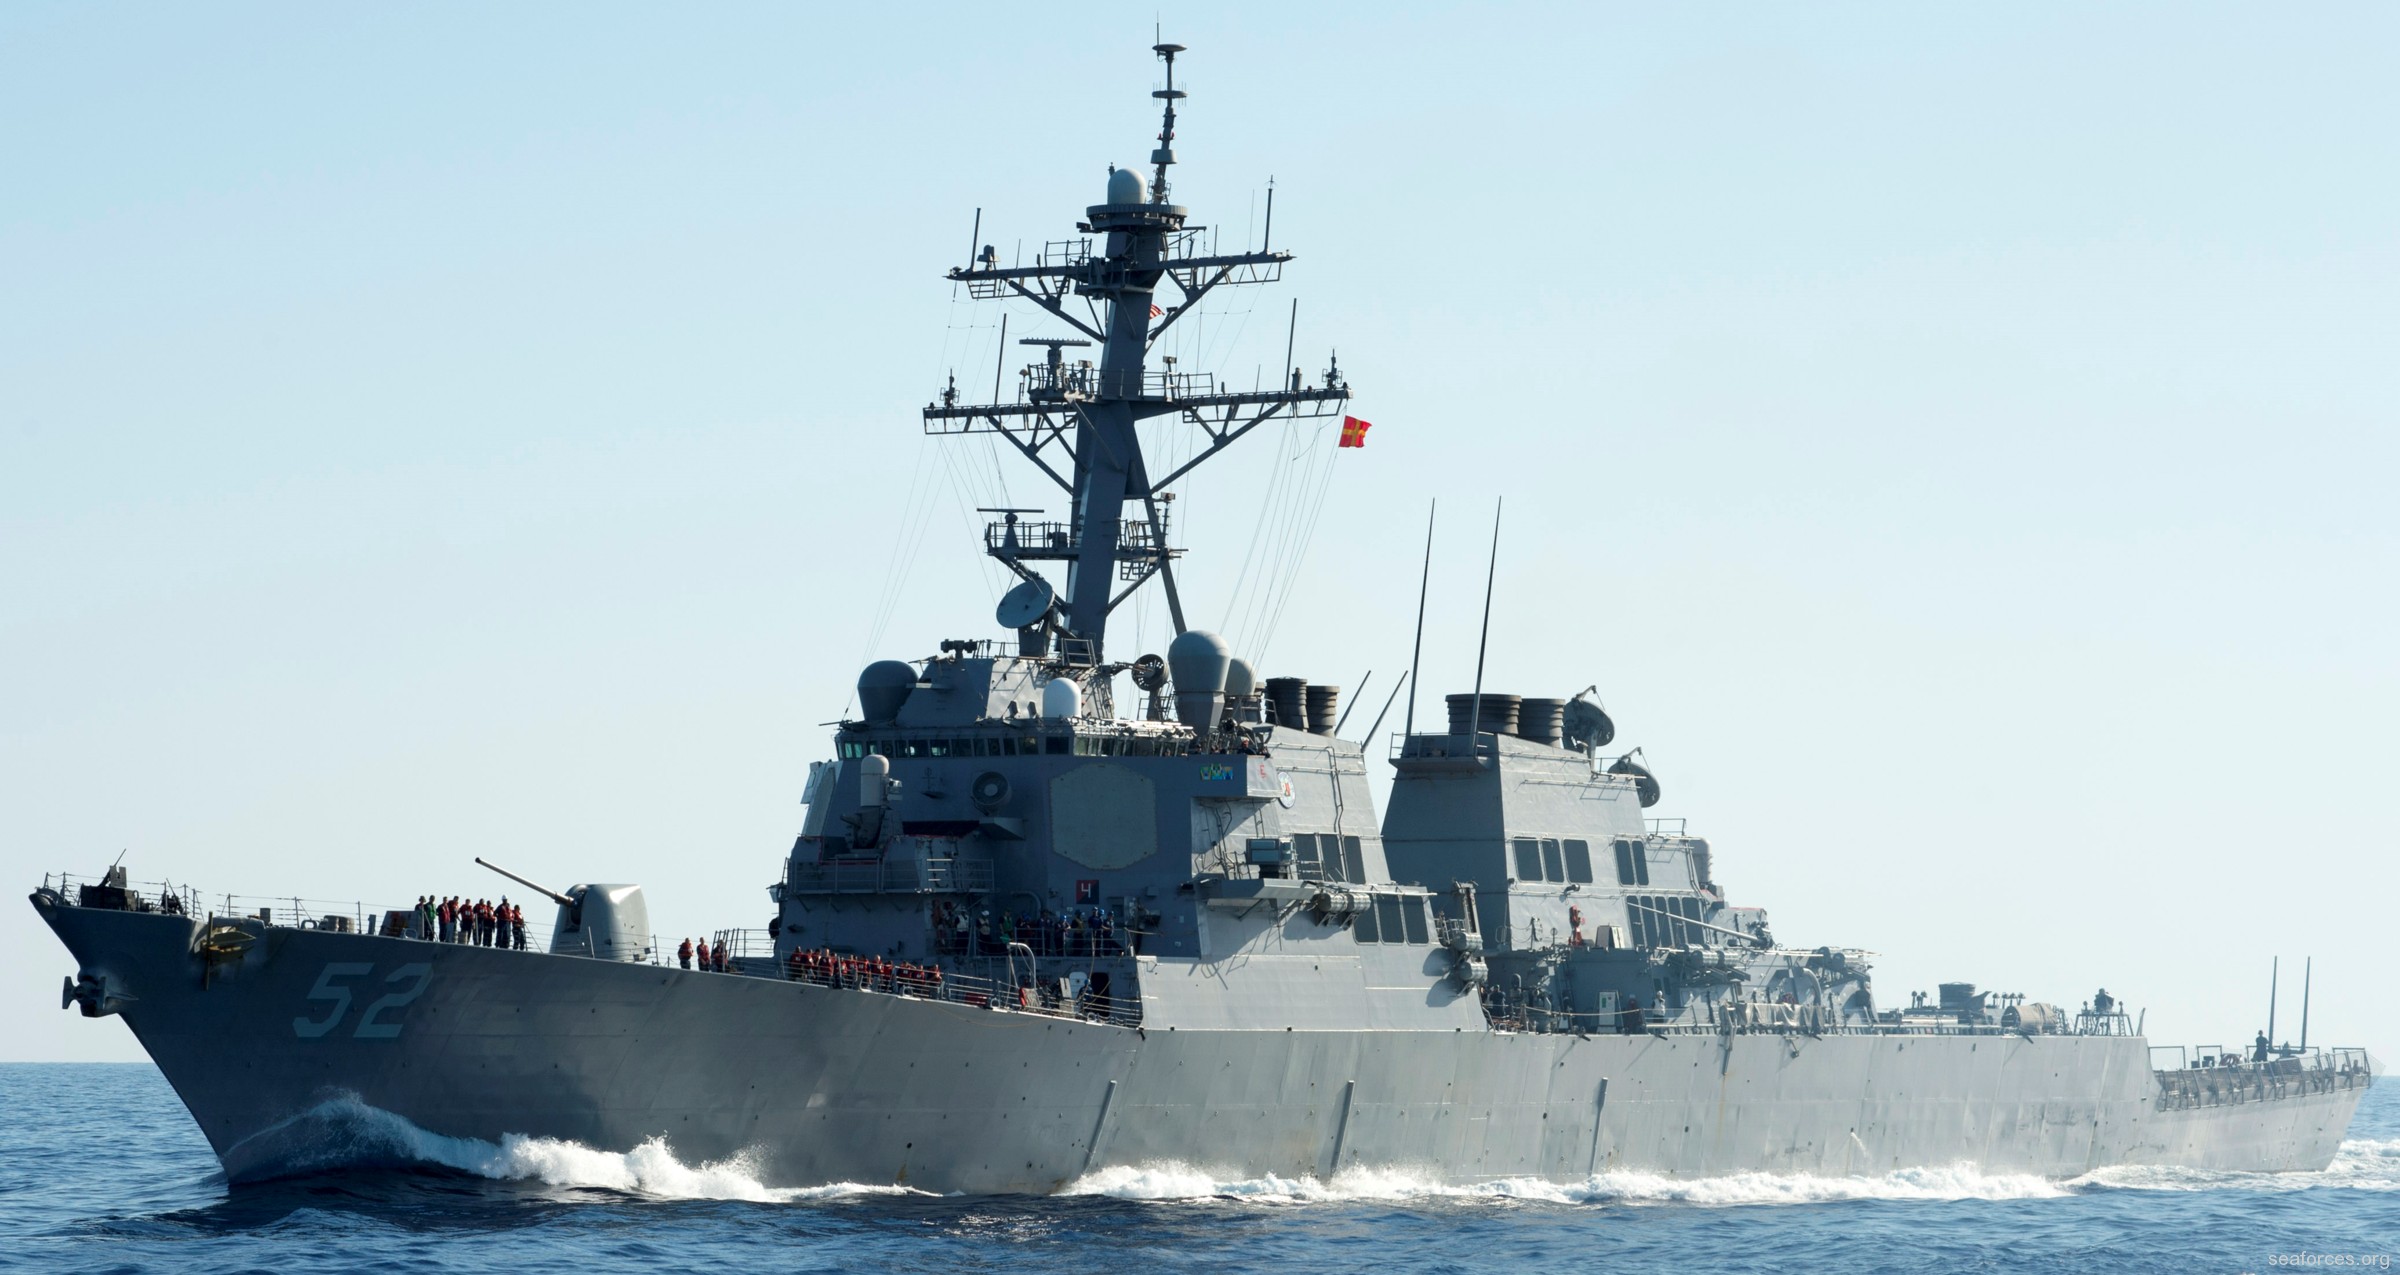 ddg-52 uss barry guided missile destroyer us navy 37 mediterranean sea